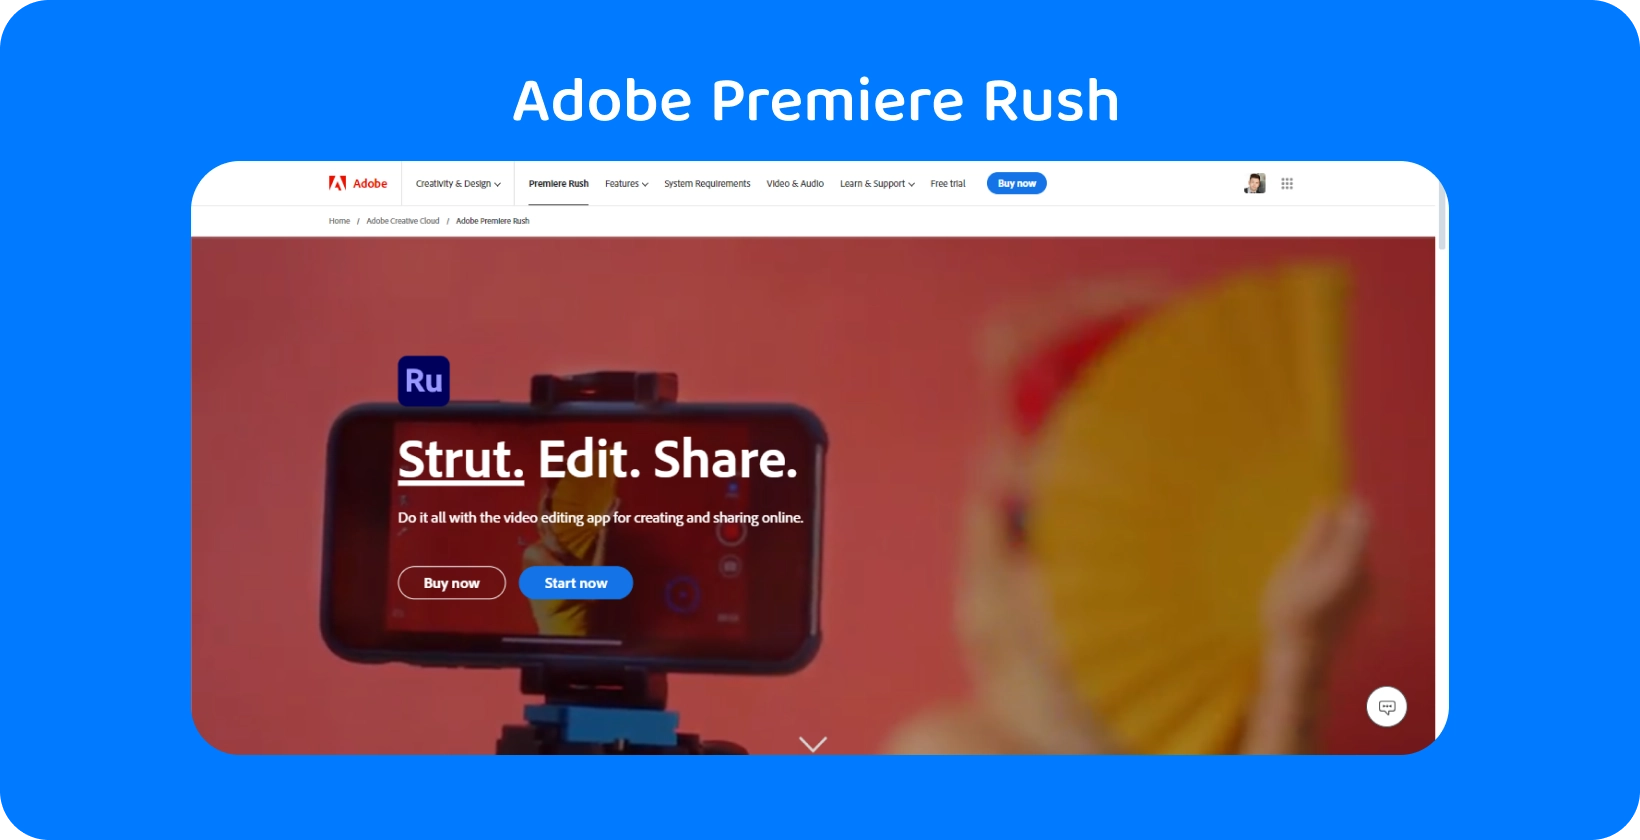 Adobe Premiere Rush σε ένα smartphone τοποθετημένο σε τρίποδο με το σύνθημα "Strut. Edit. Share." για επεξεργασία βίντεο.